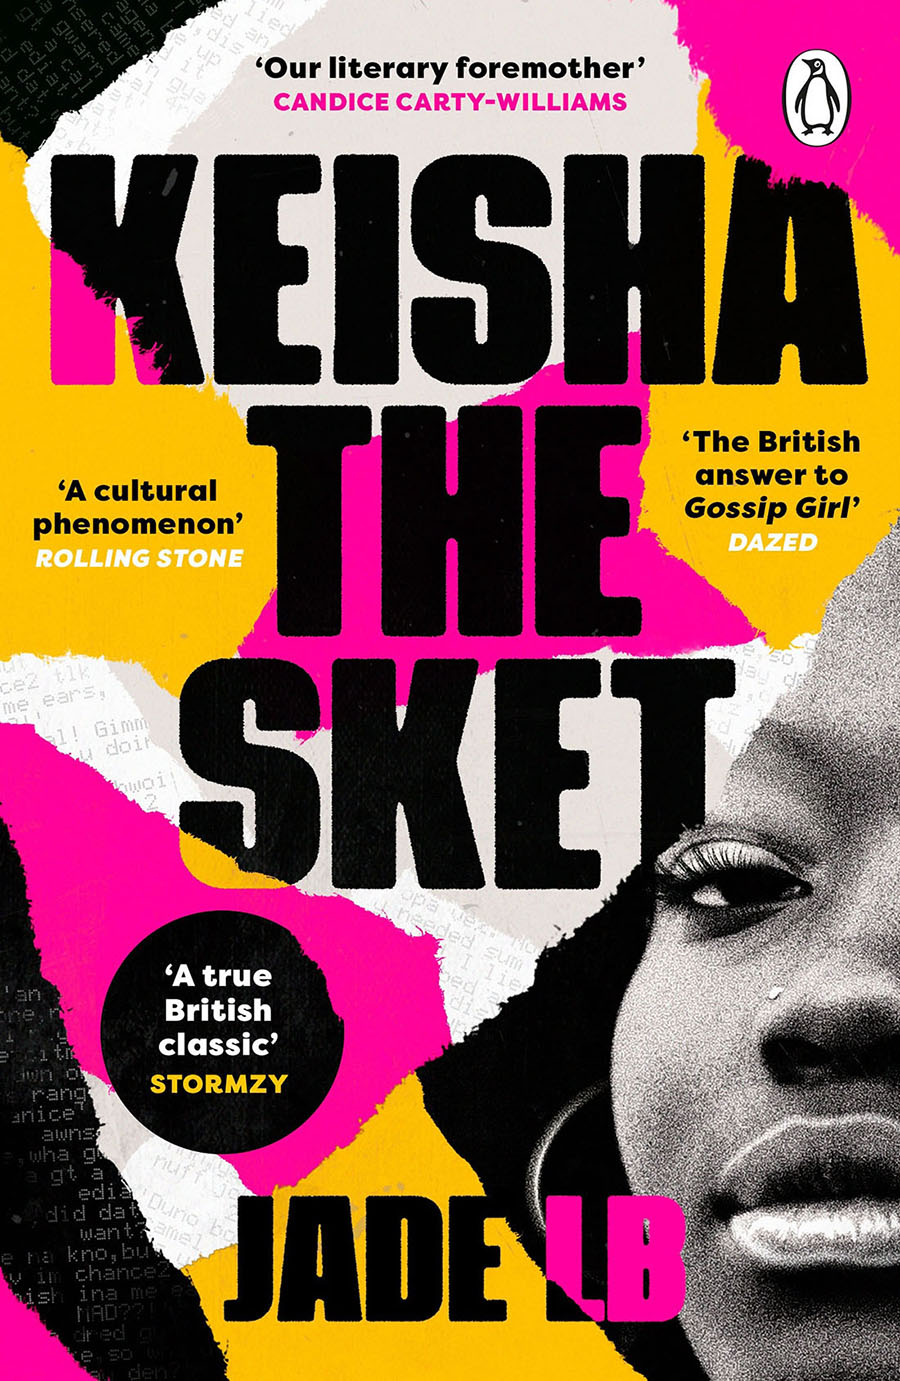 Keisha-The-Sket-book-cover